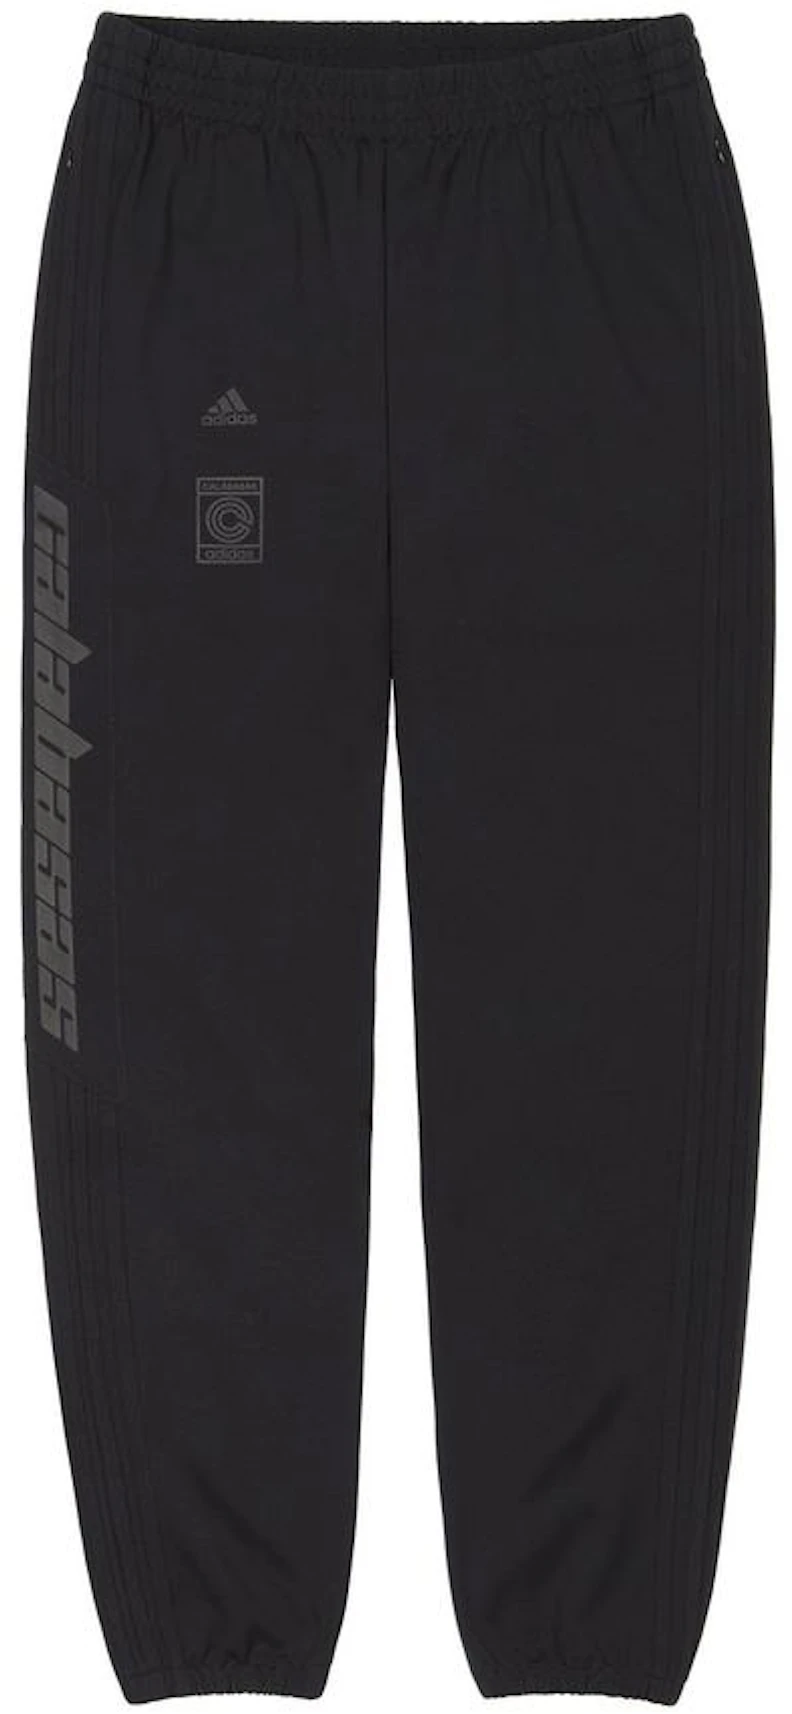 adidas Yeezy Calabasas Track Pants Black/Black - FW17 - CA